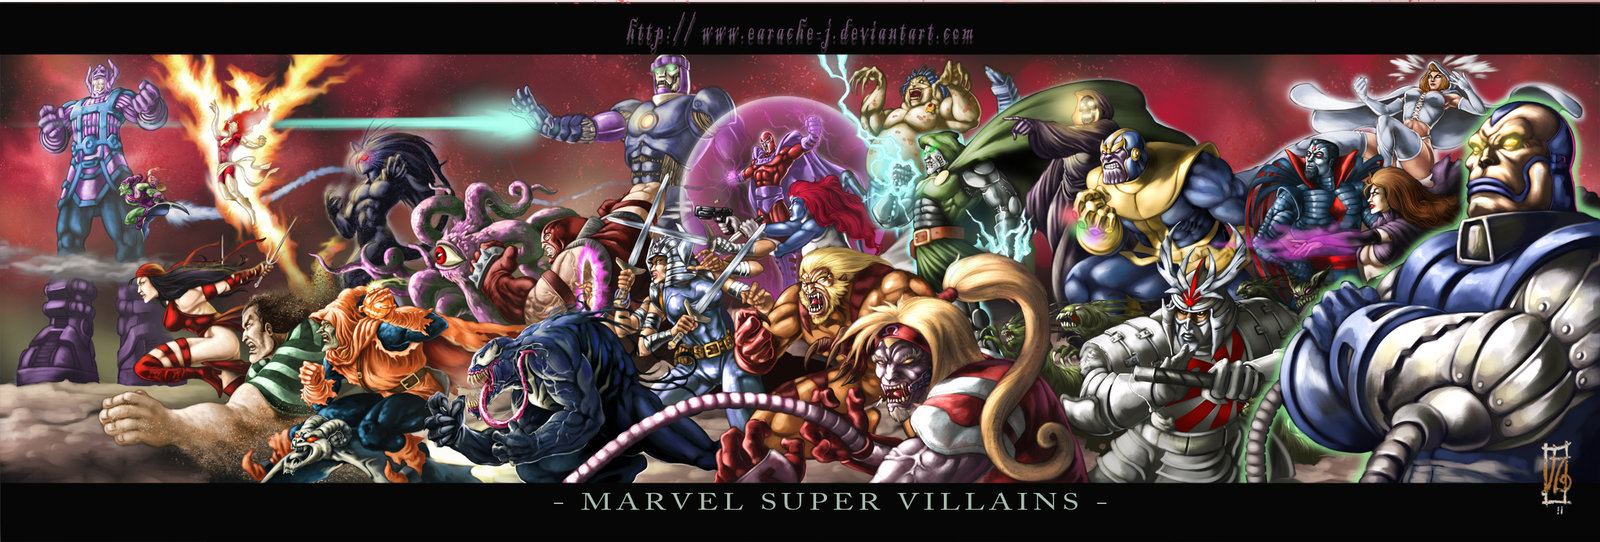 Super Villains By Earache J